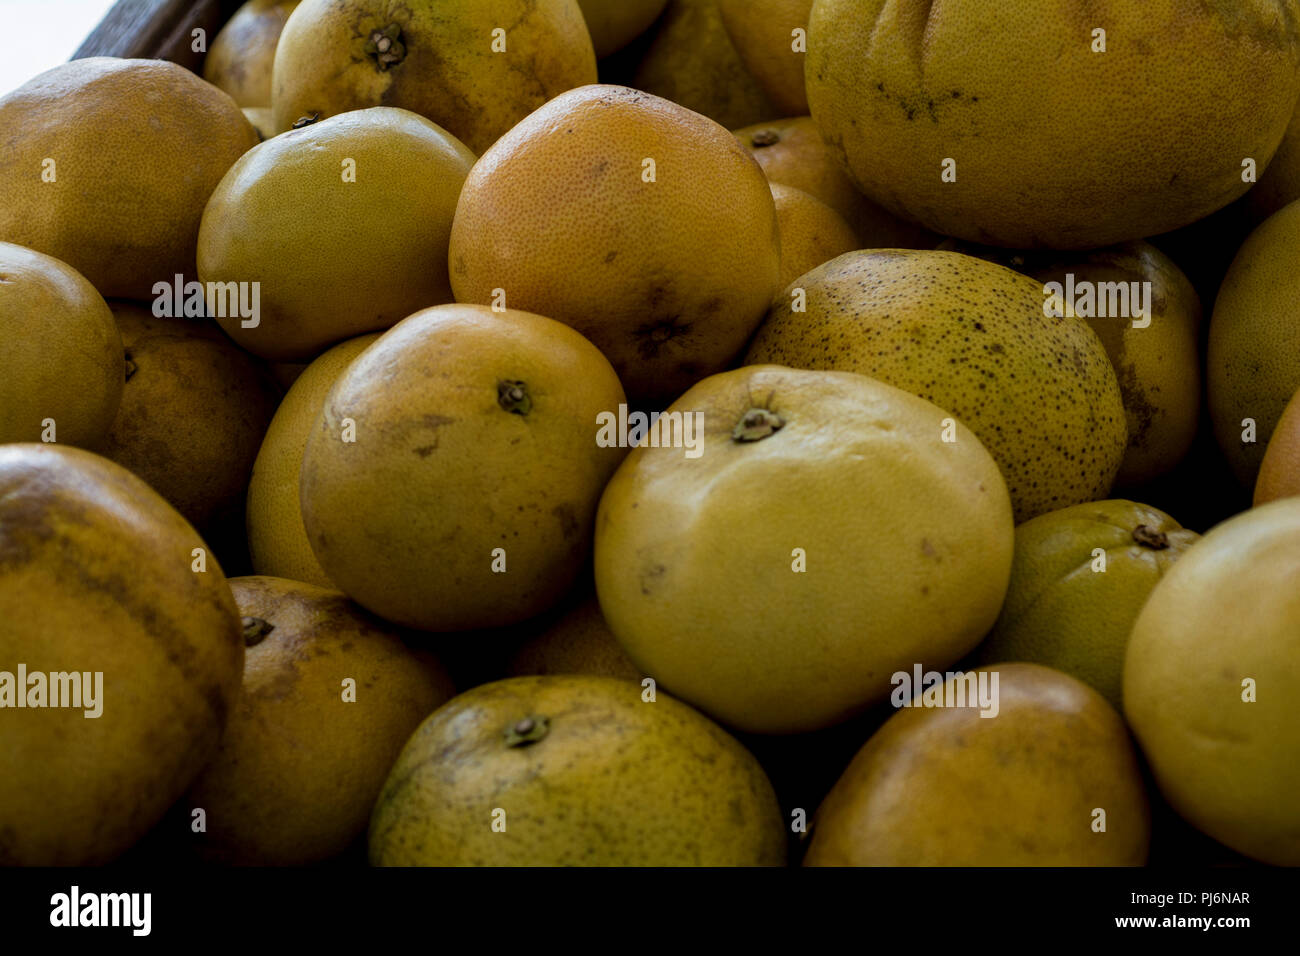 pile of grapefruit Stock Photo